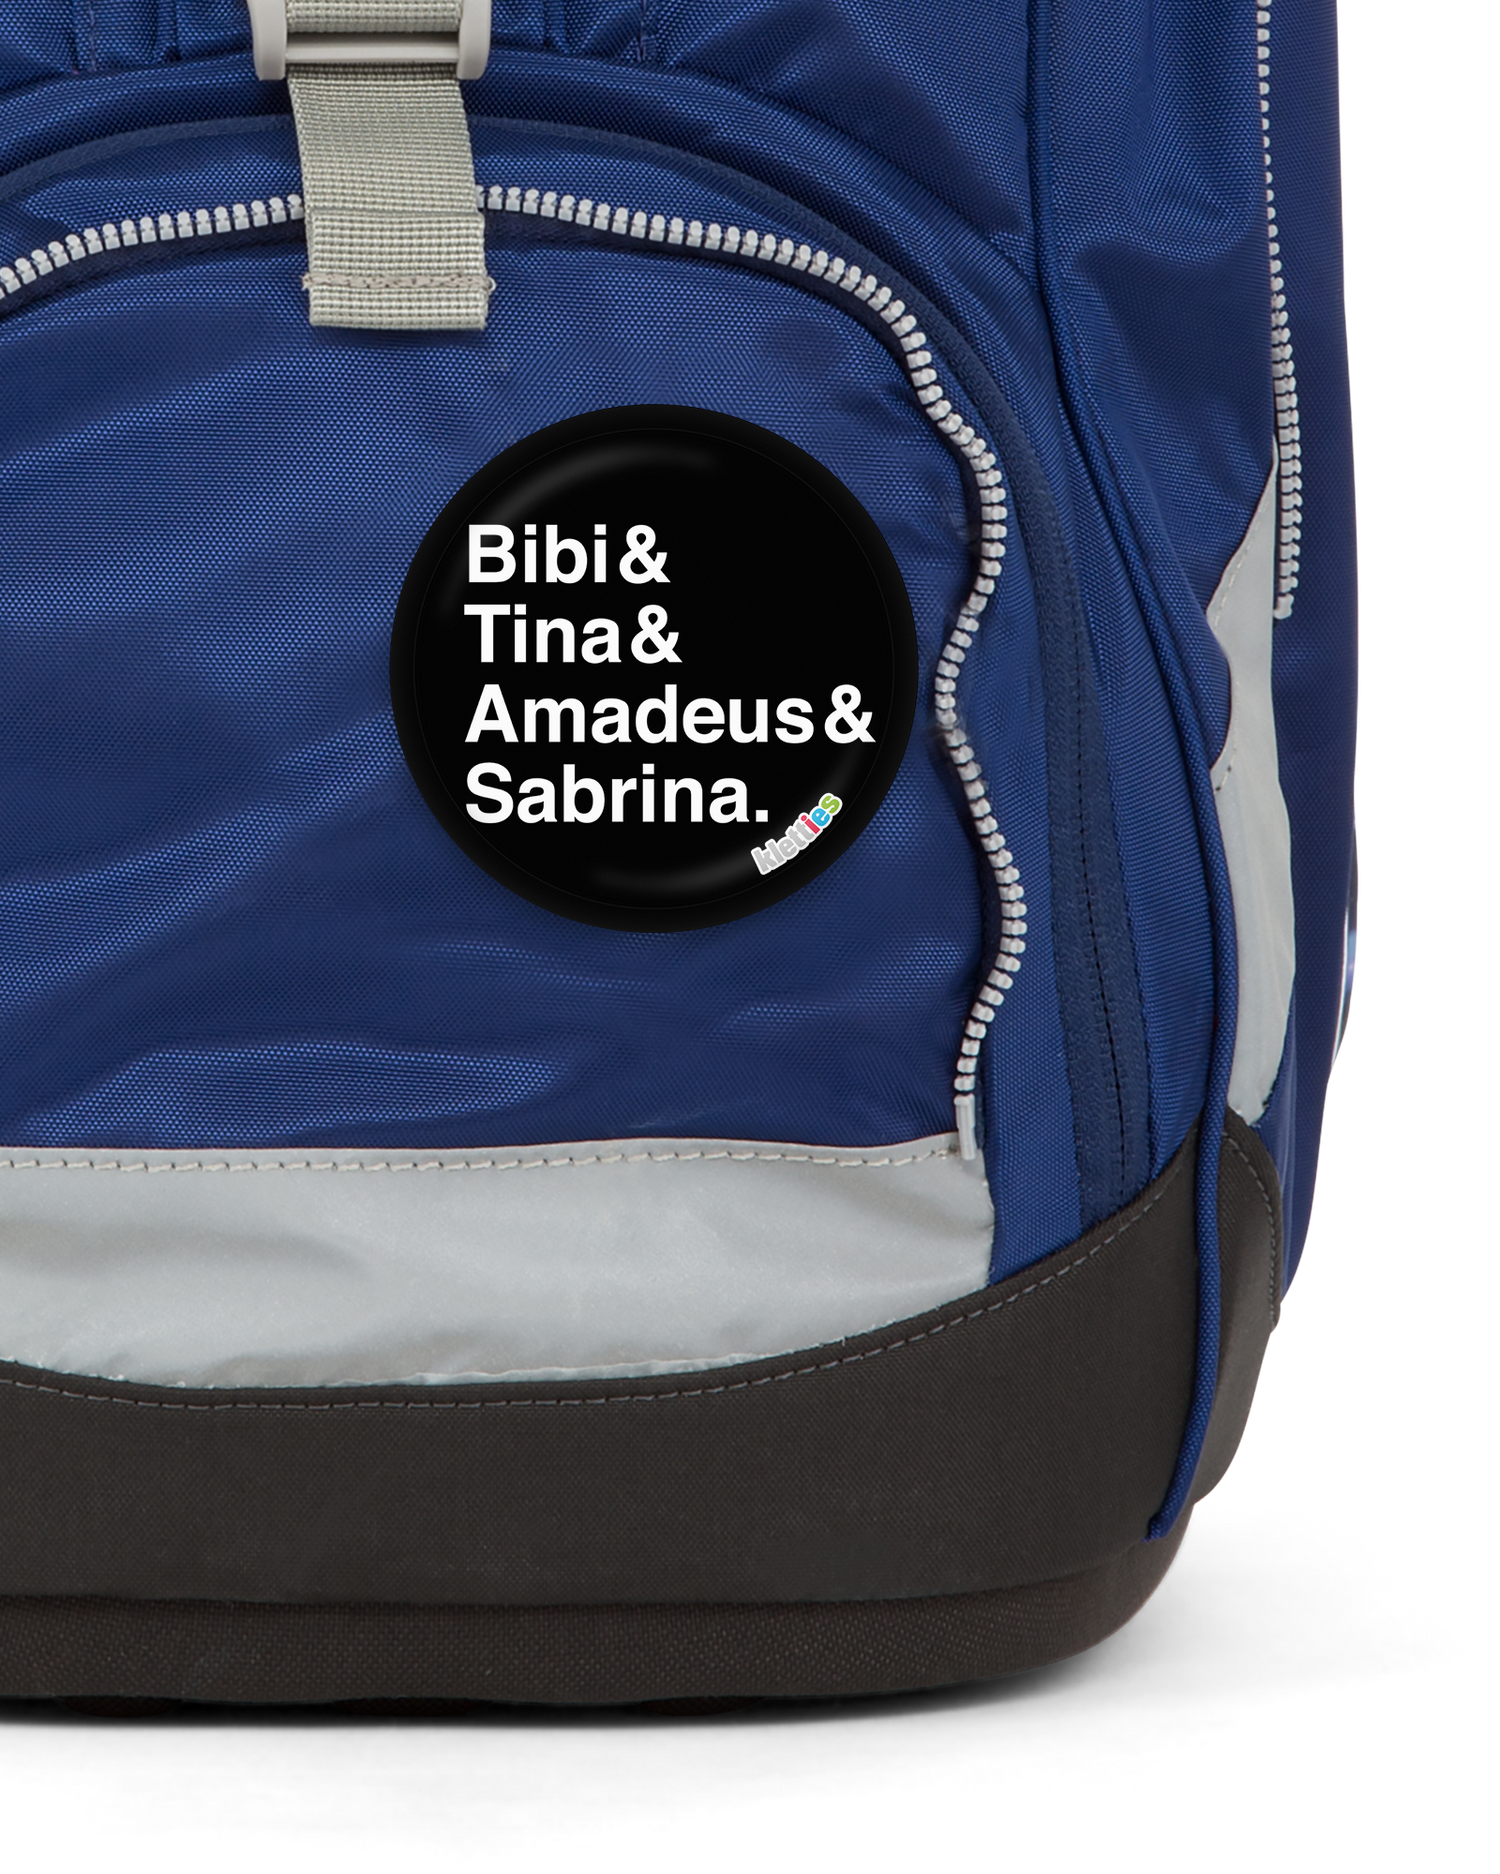 BIBI & TINA & AMADEUS & SABRINA  Klettie: Detailaufnahme am ergobag Rucksack